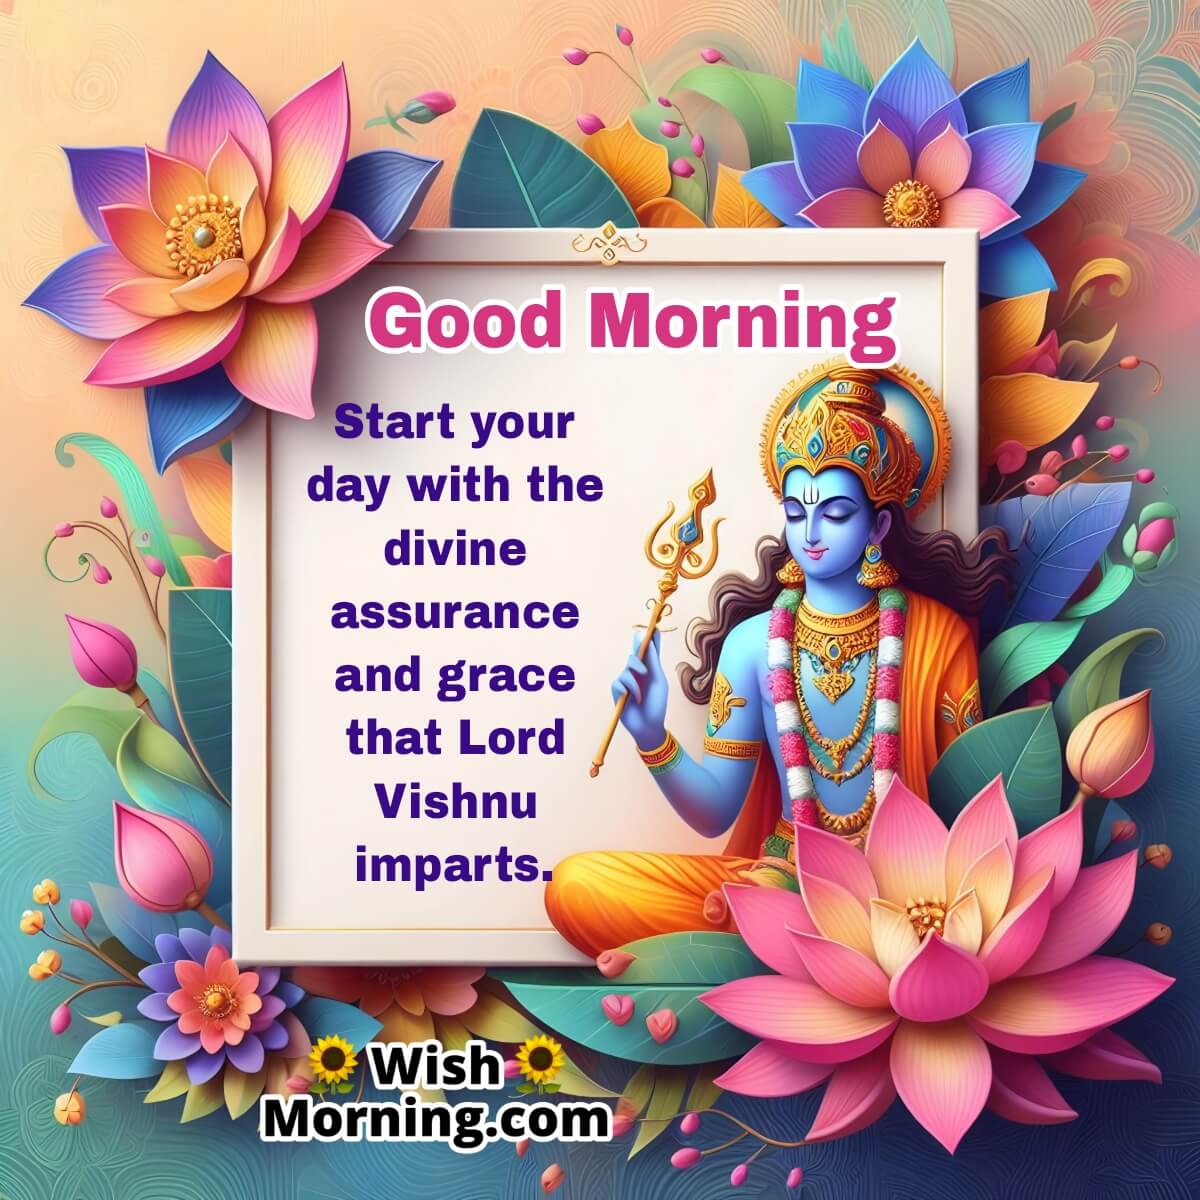 Good Morning Lord Vishnu Message